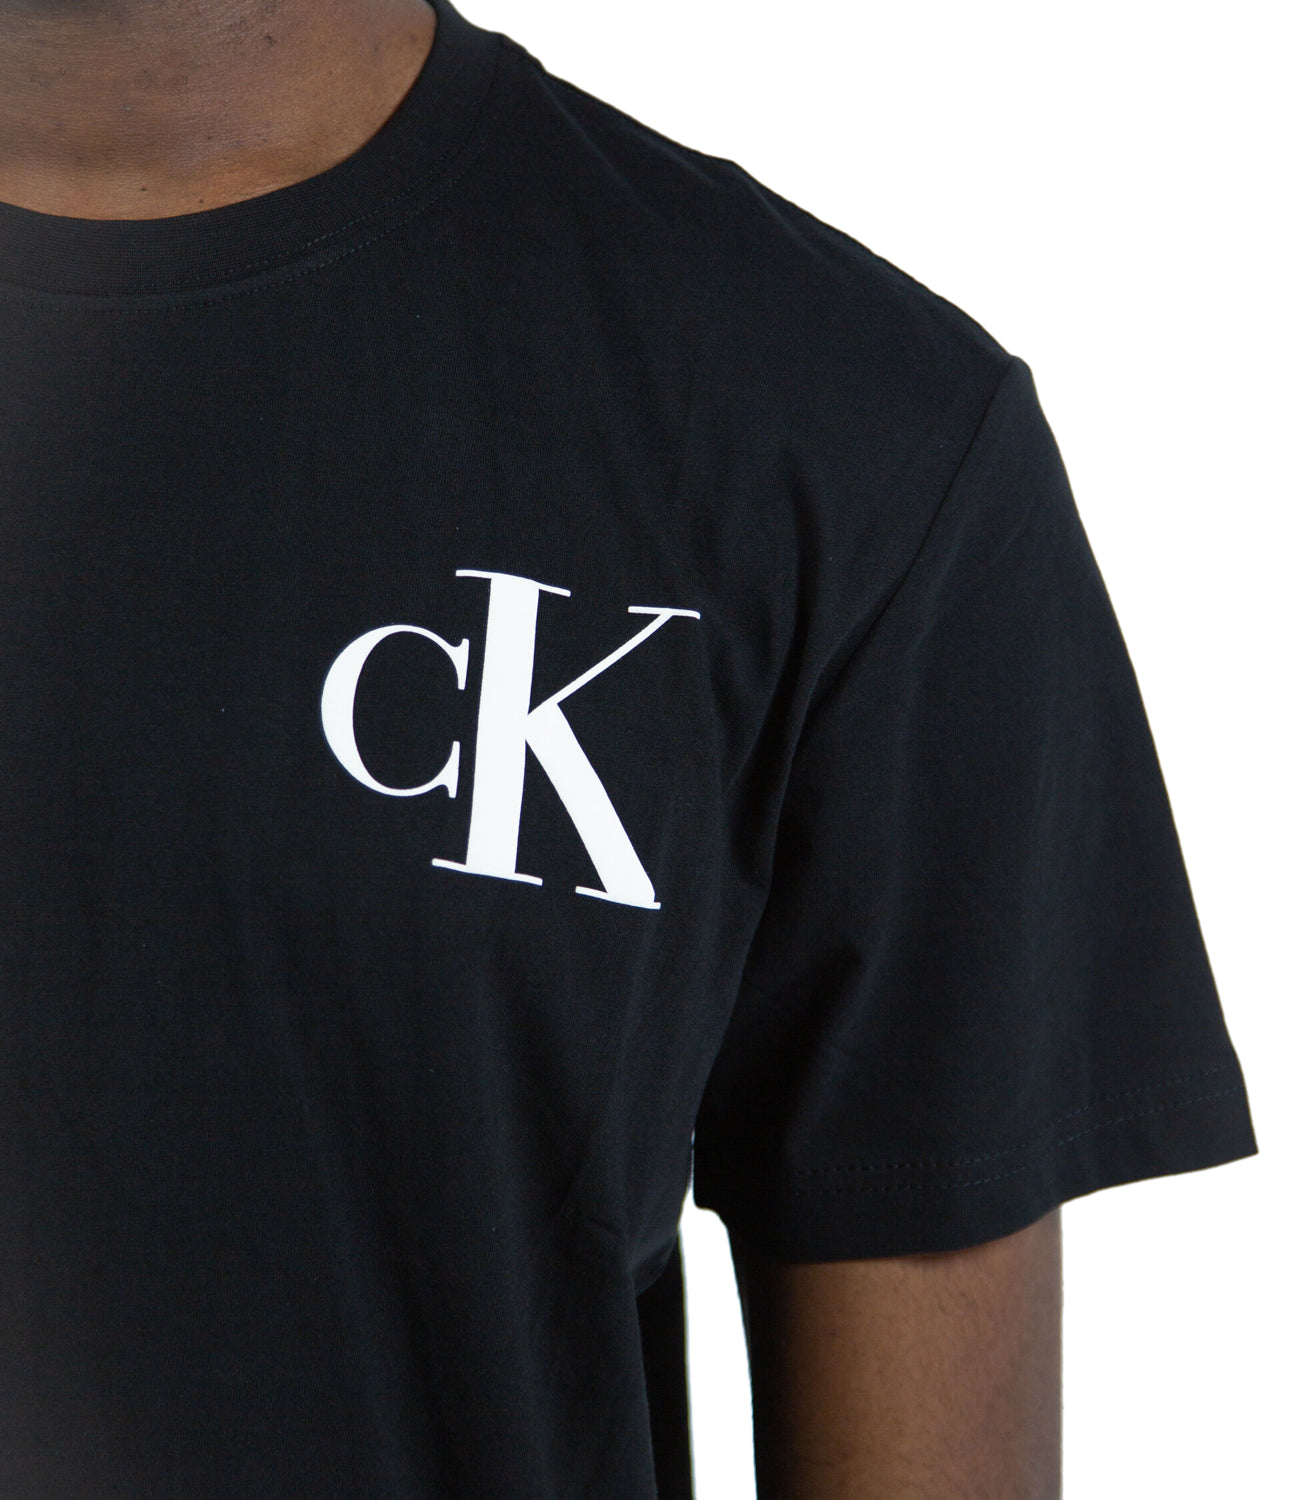 CK J U PRE T-shirt con logo CK nero